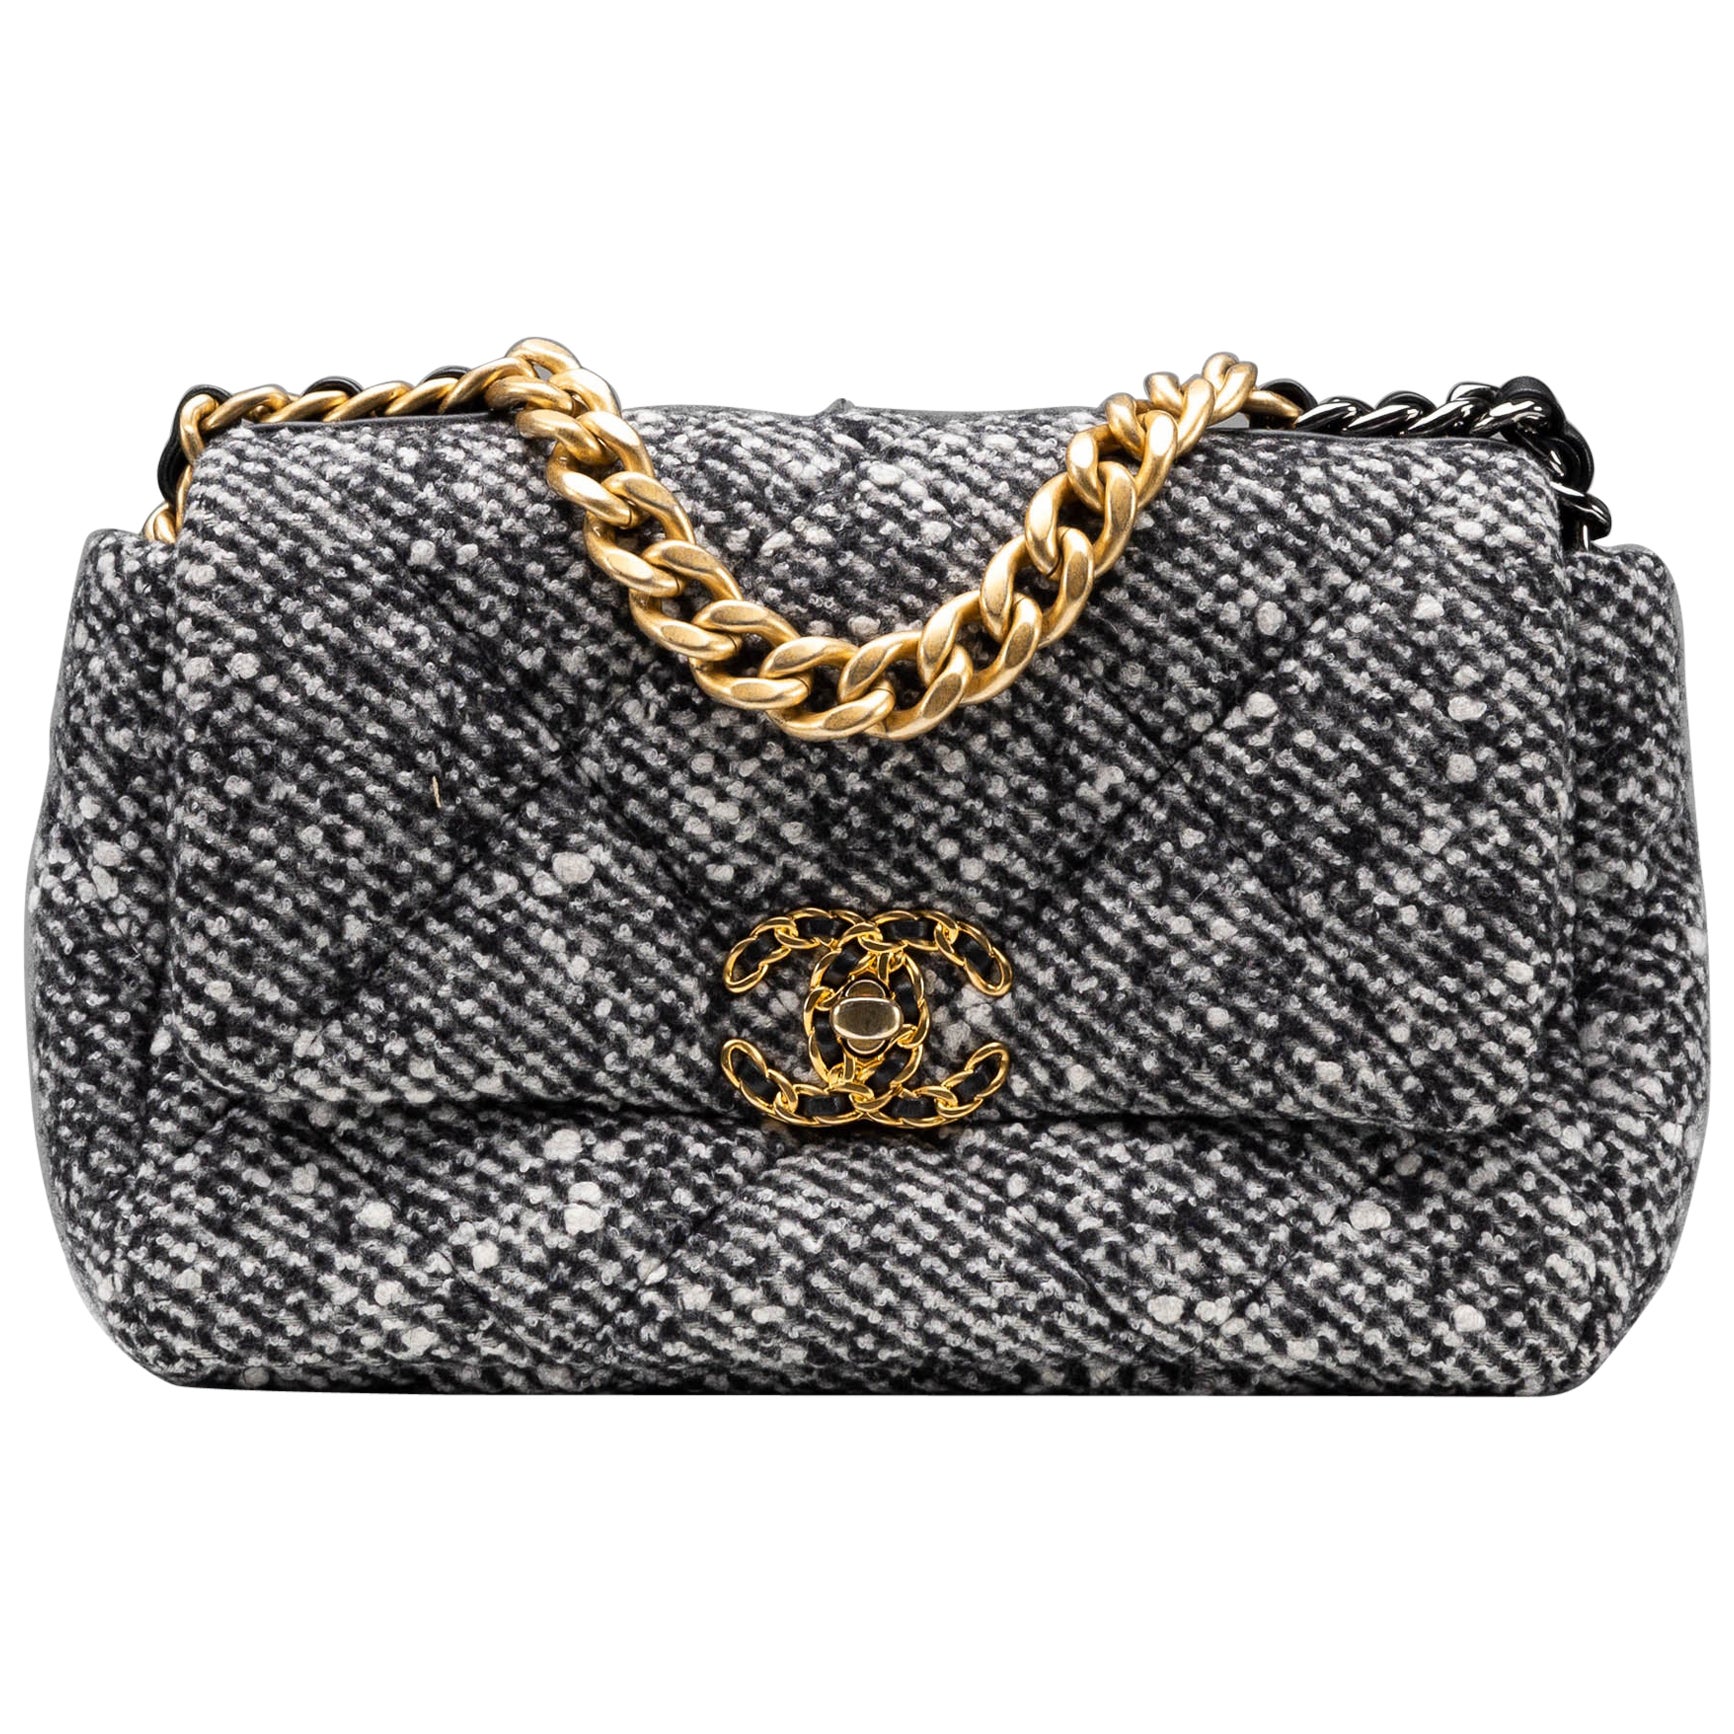 Chanel 19 Handbag